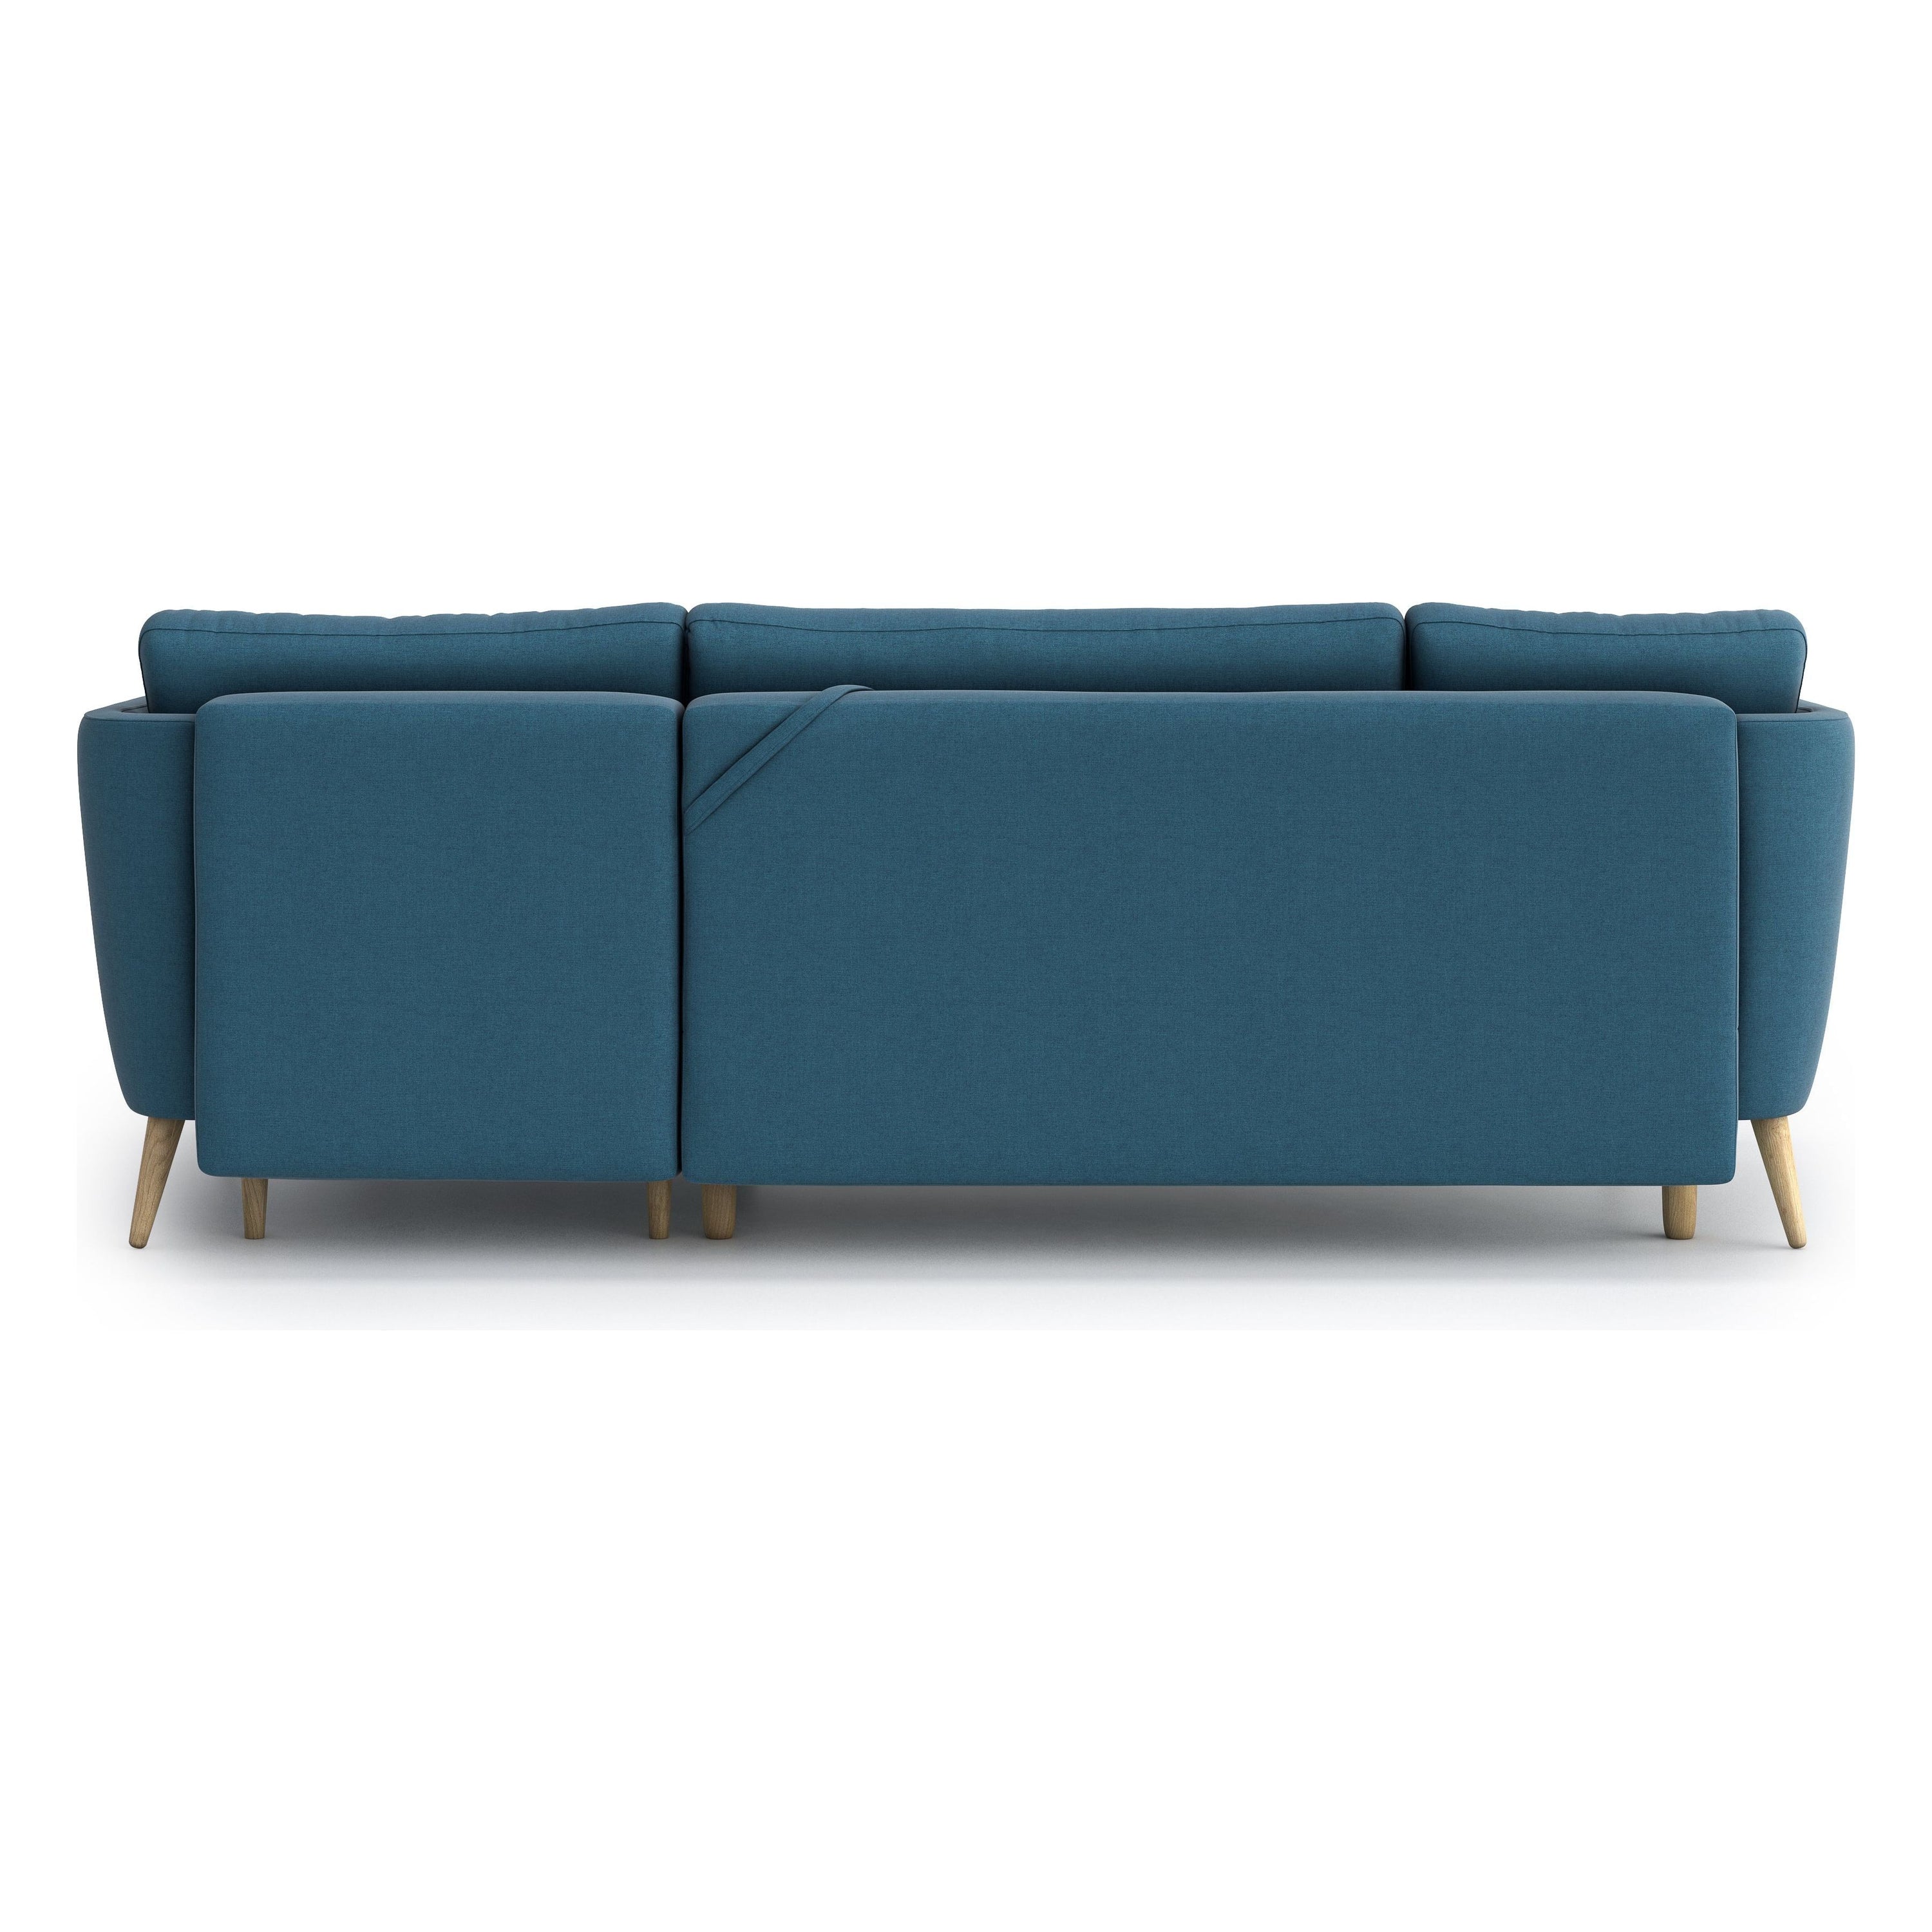 JANE kampinė sofa lova, mėlyna spalva, universali kampo pusė